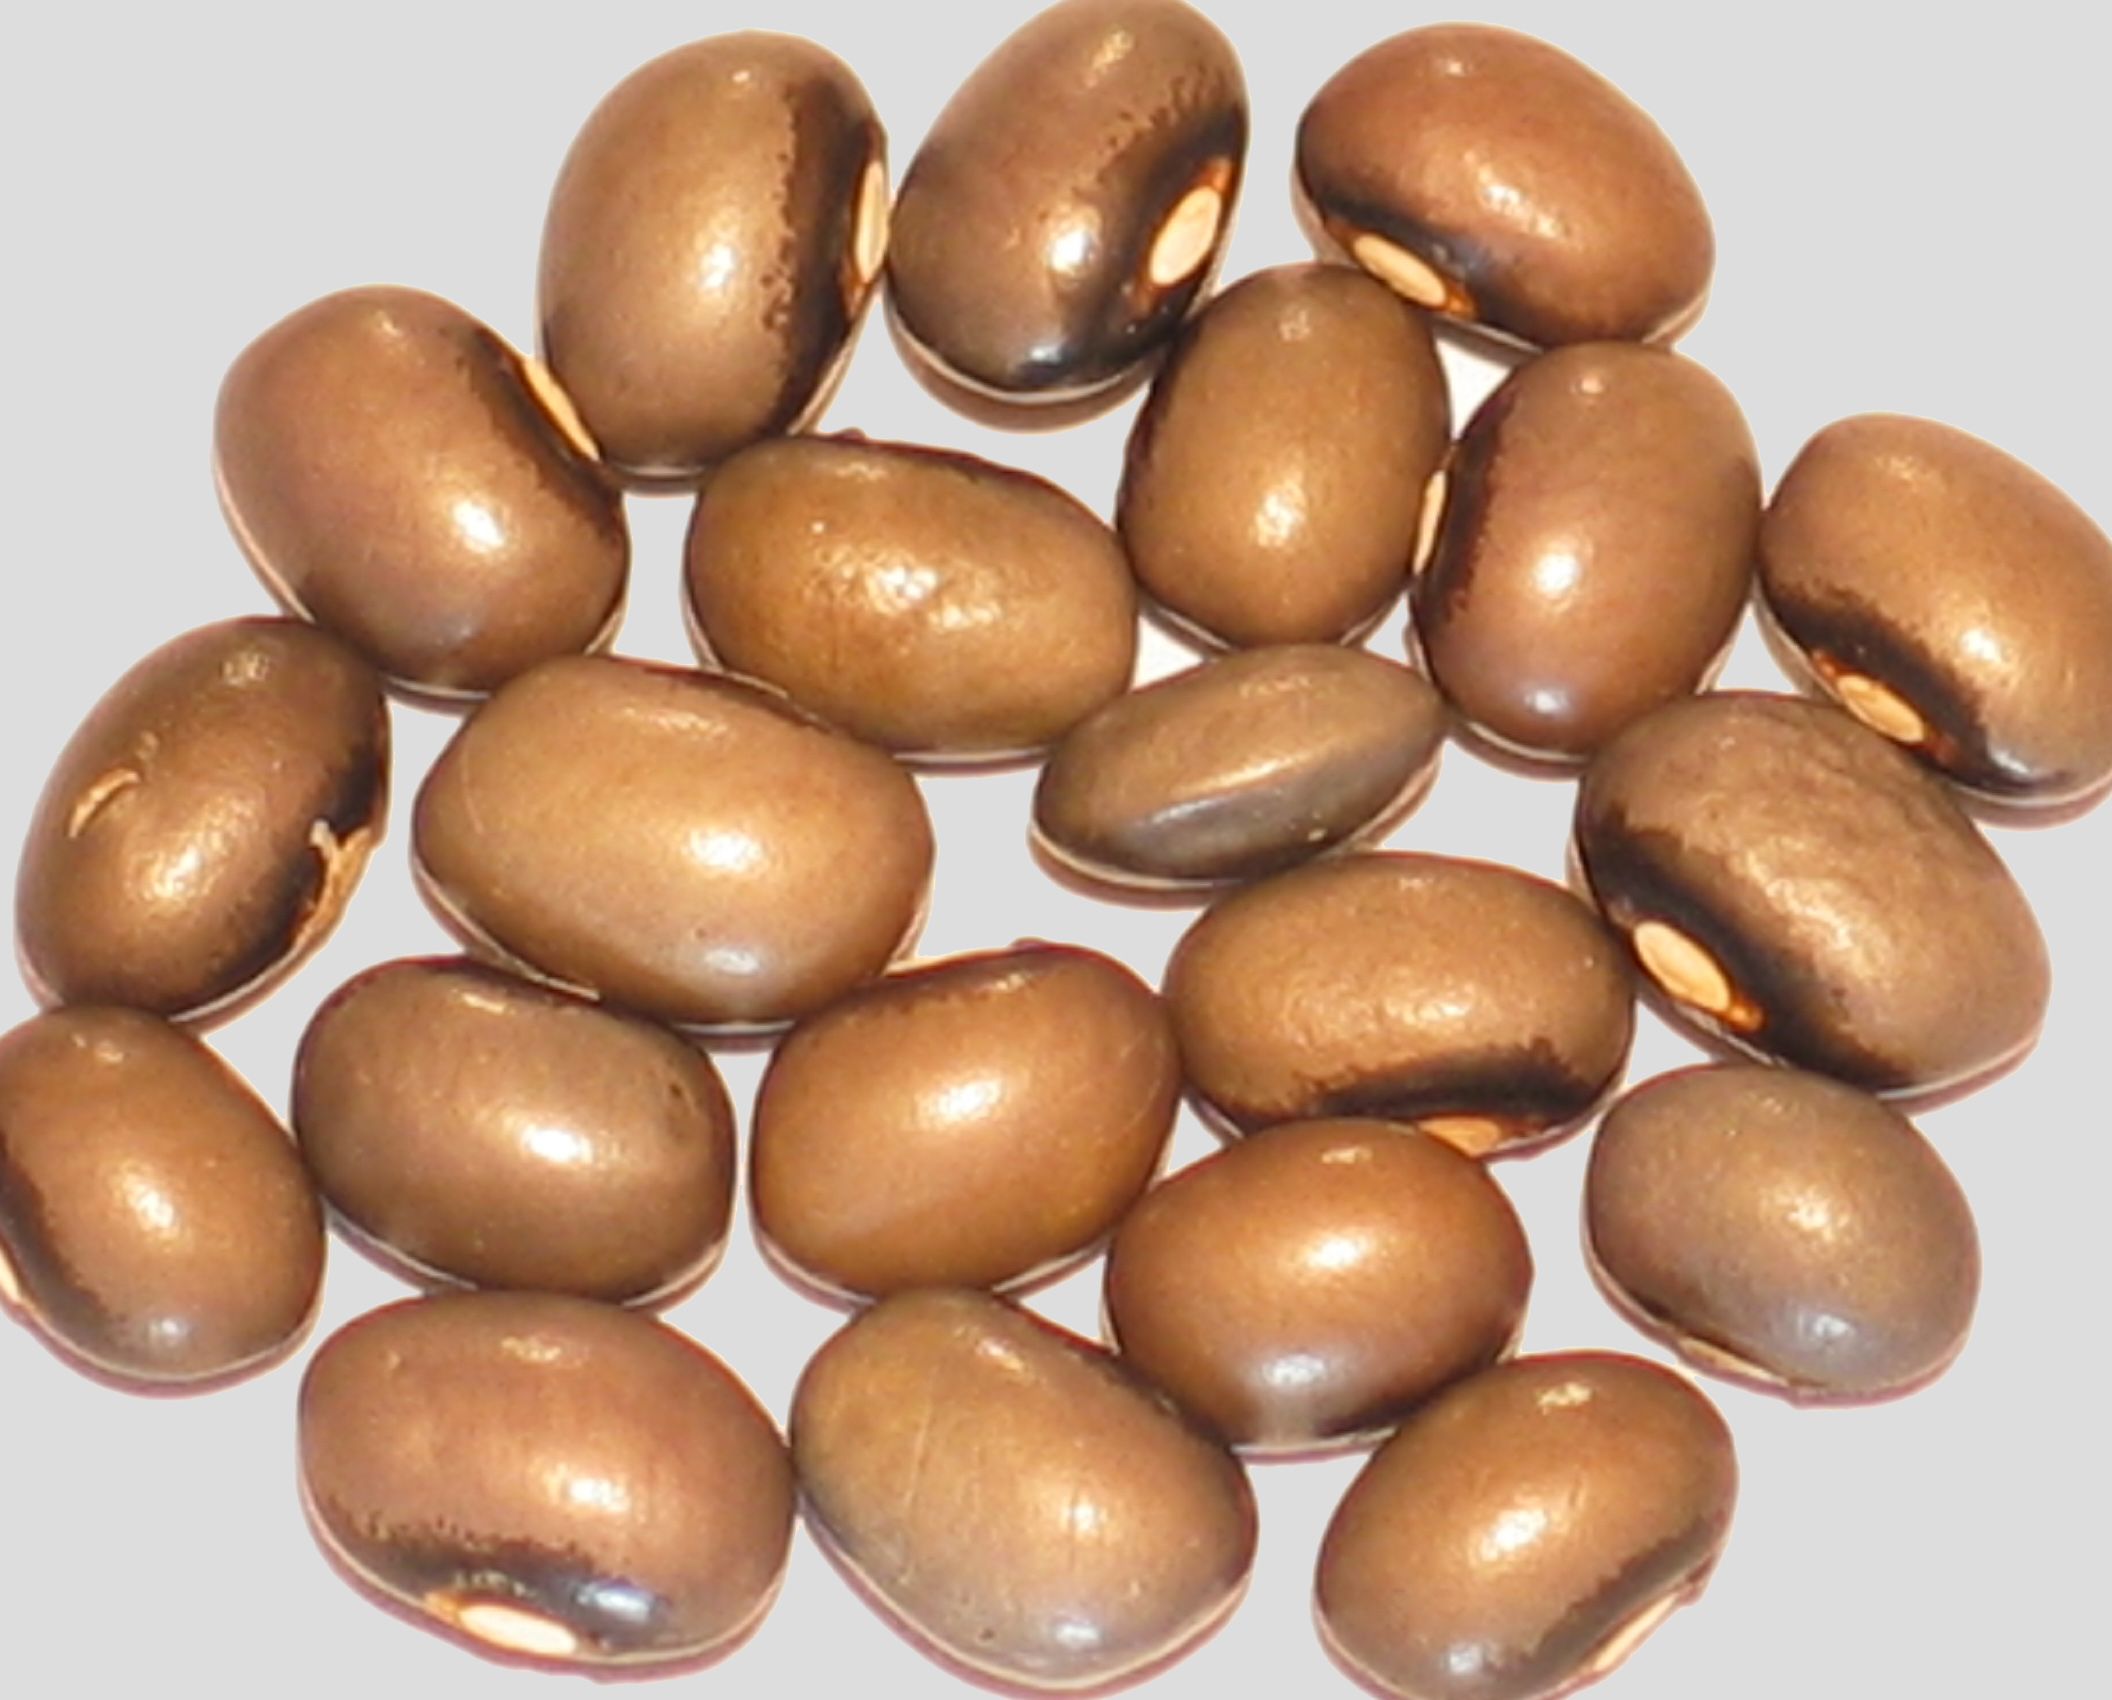 image of Mugungi beans